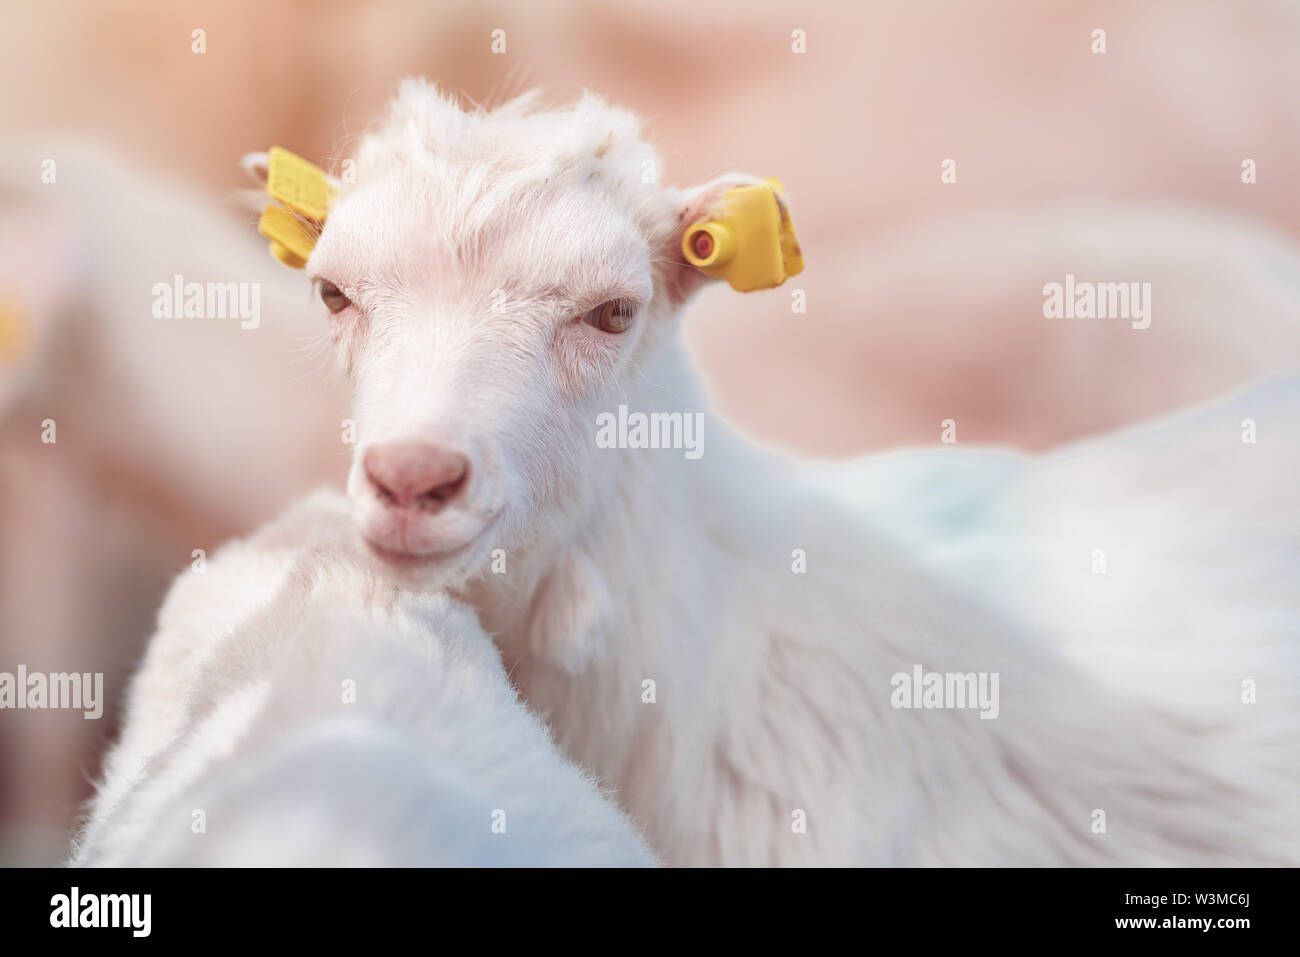 Cute baby goat kid in pen on livestock farm, adorable domestic animal portrait Stock Photo